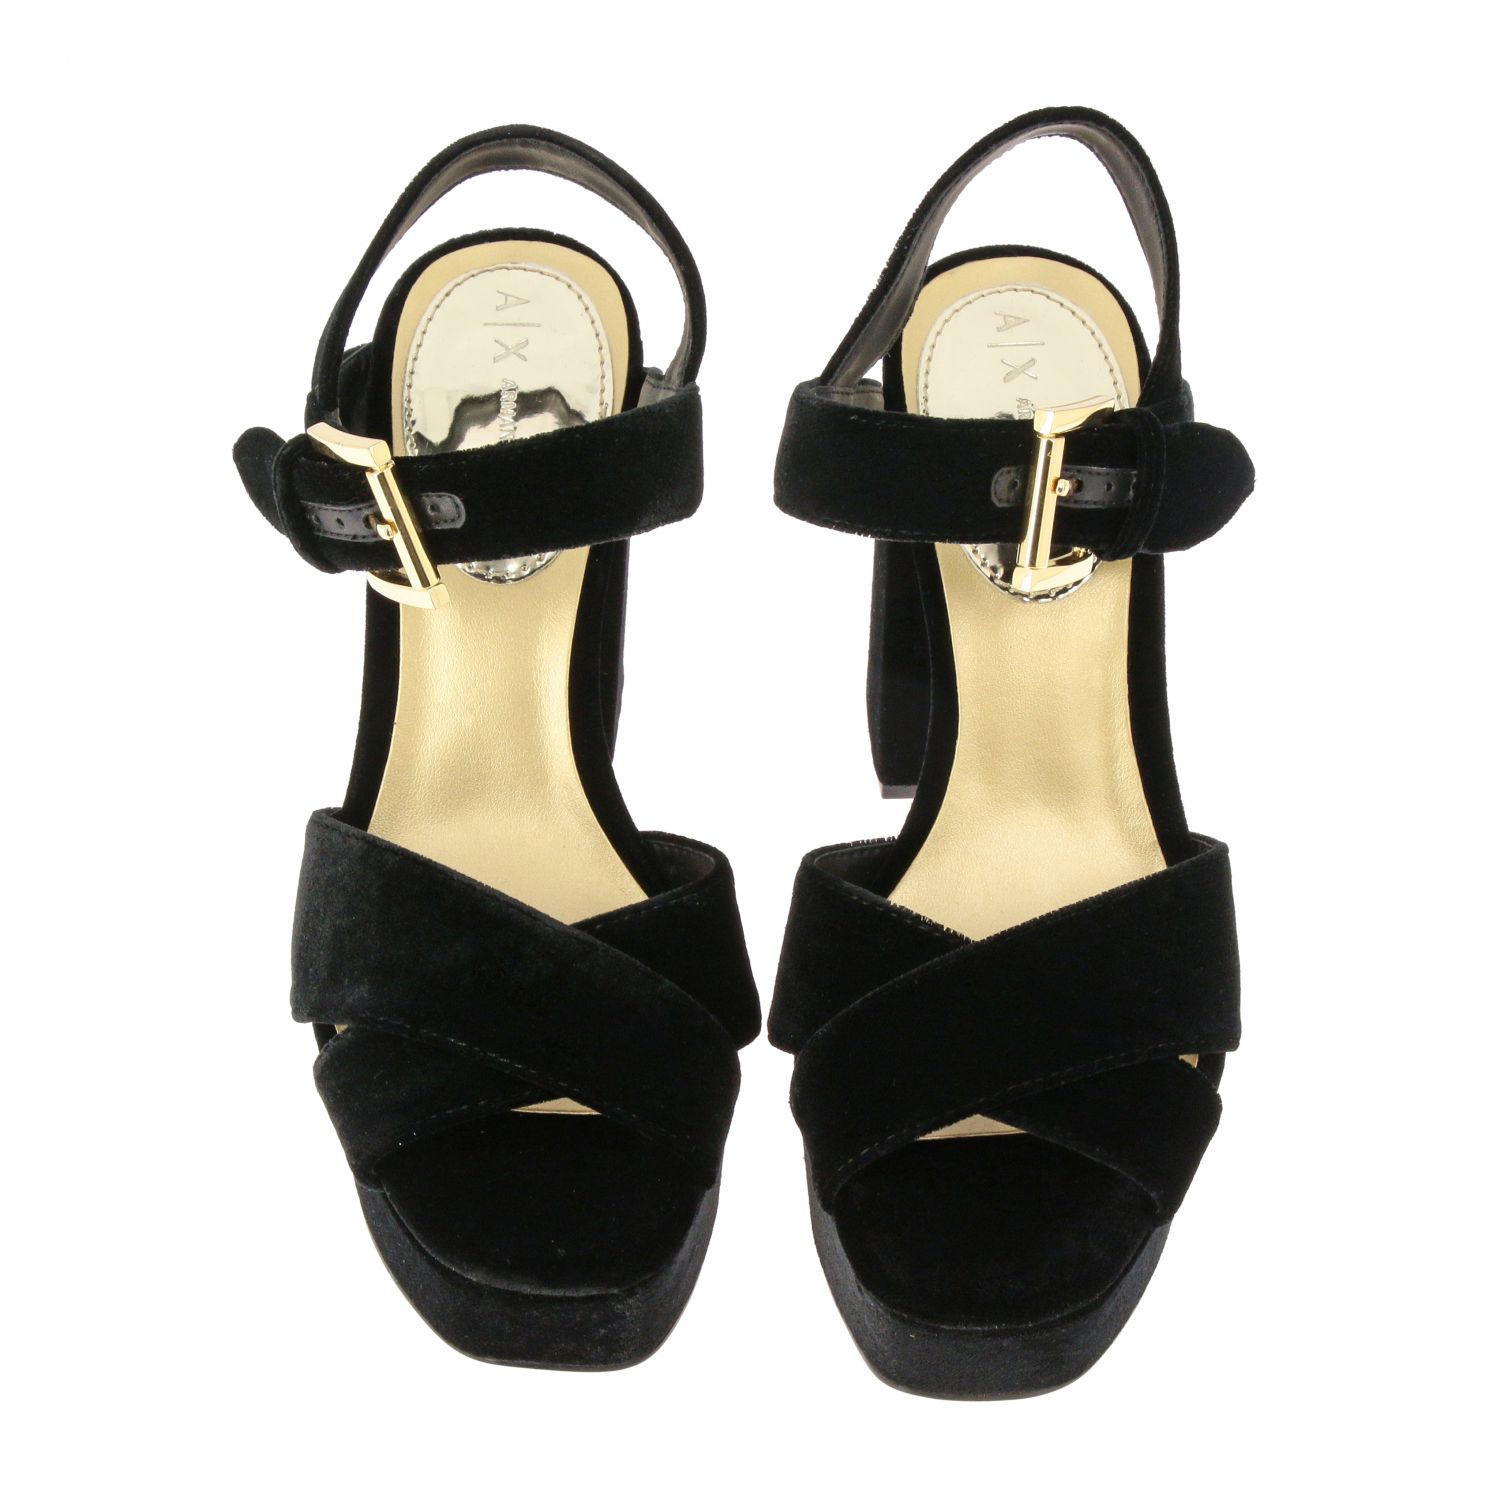 Armani Exchange Outlet: High heel shoes women - Black | High Heel Shoes ...